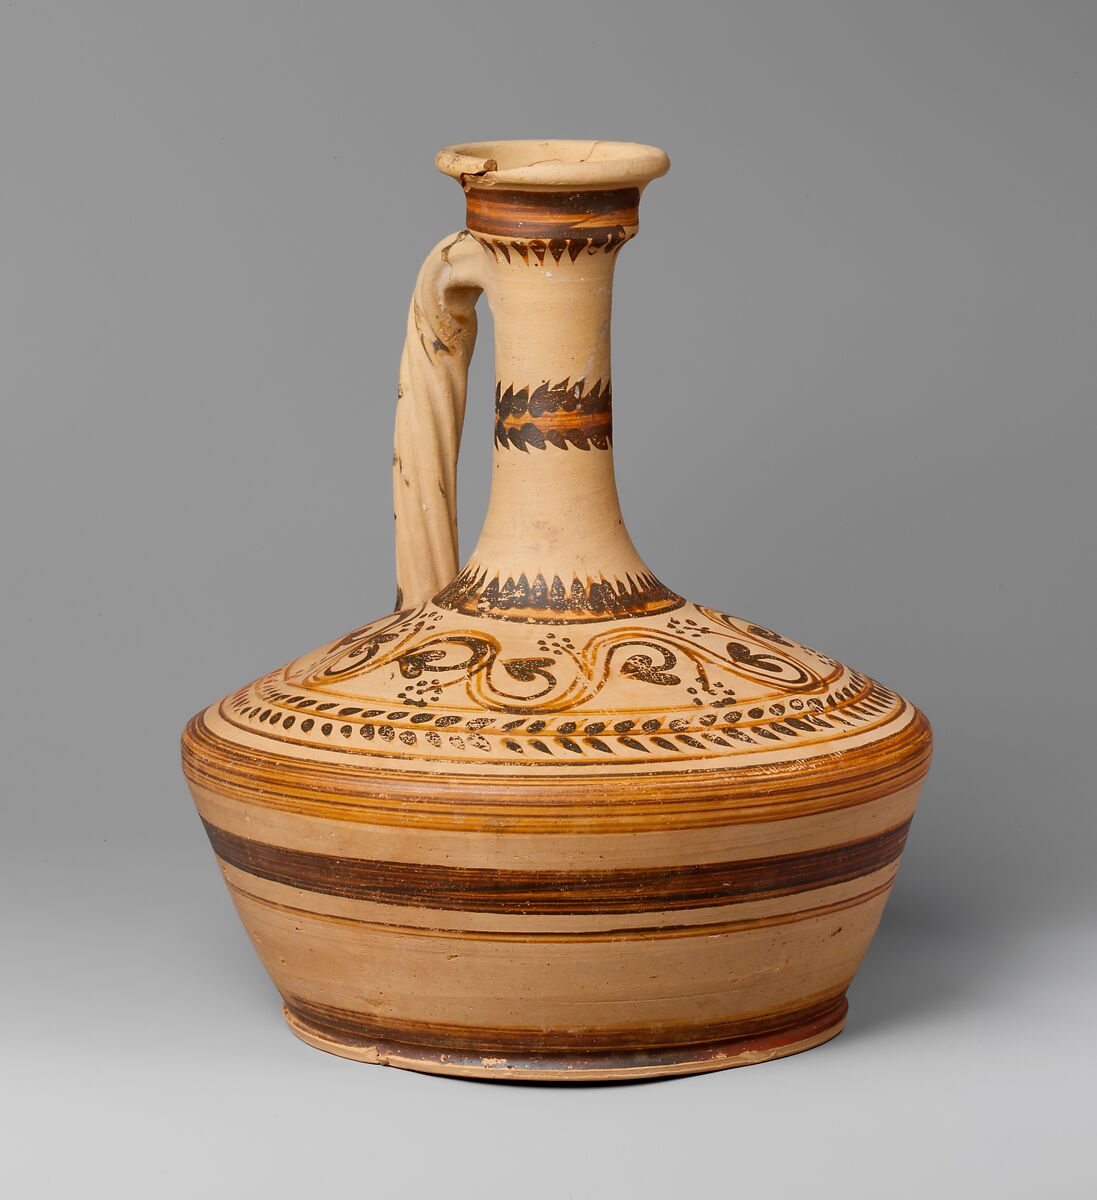 Terracotta lagynos (oil flask), Terracotta, Cypriot 